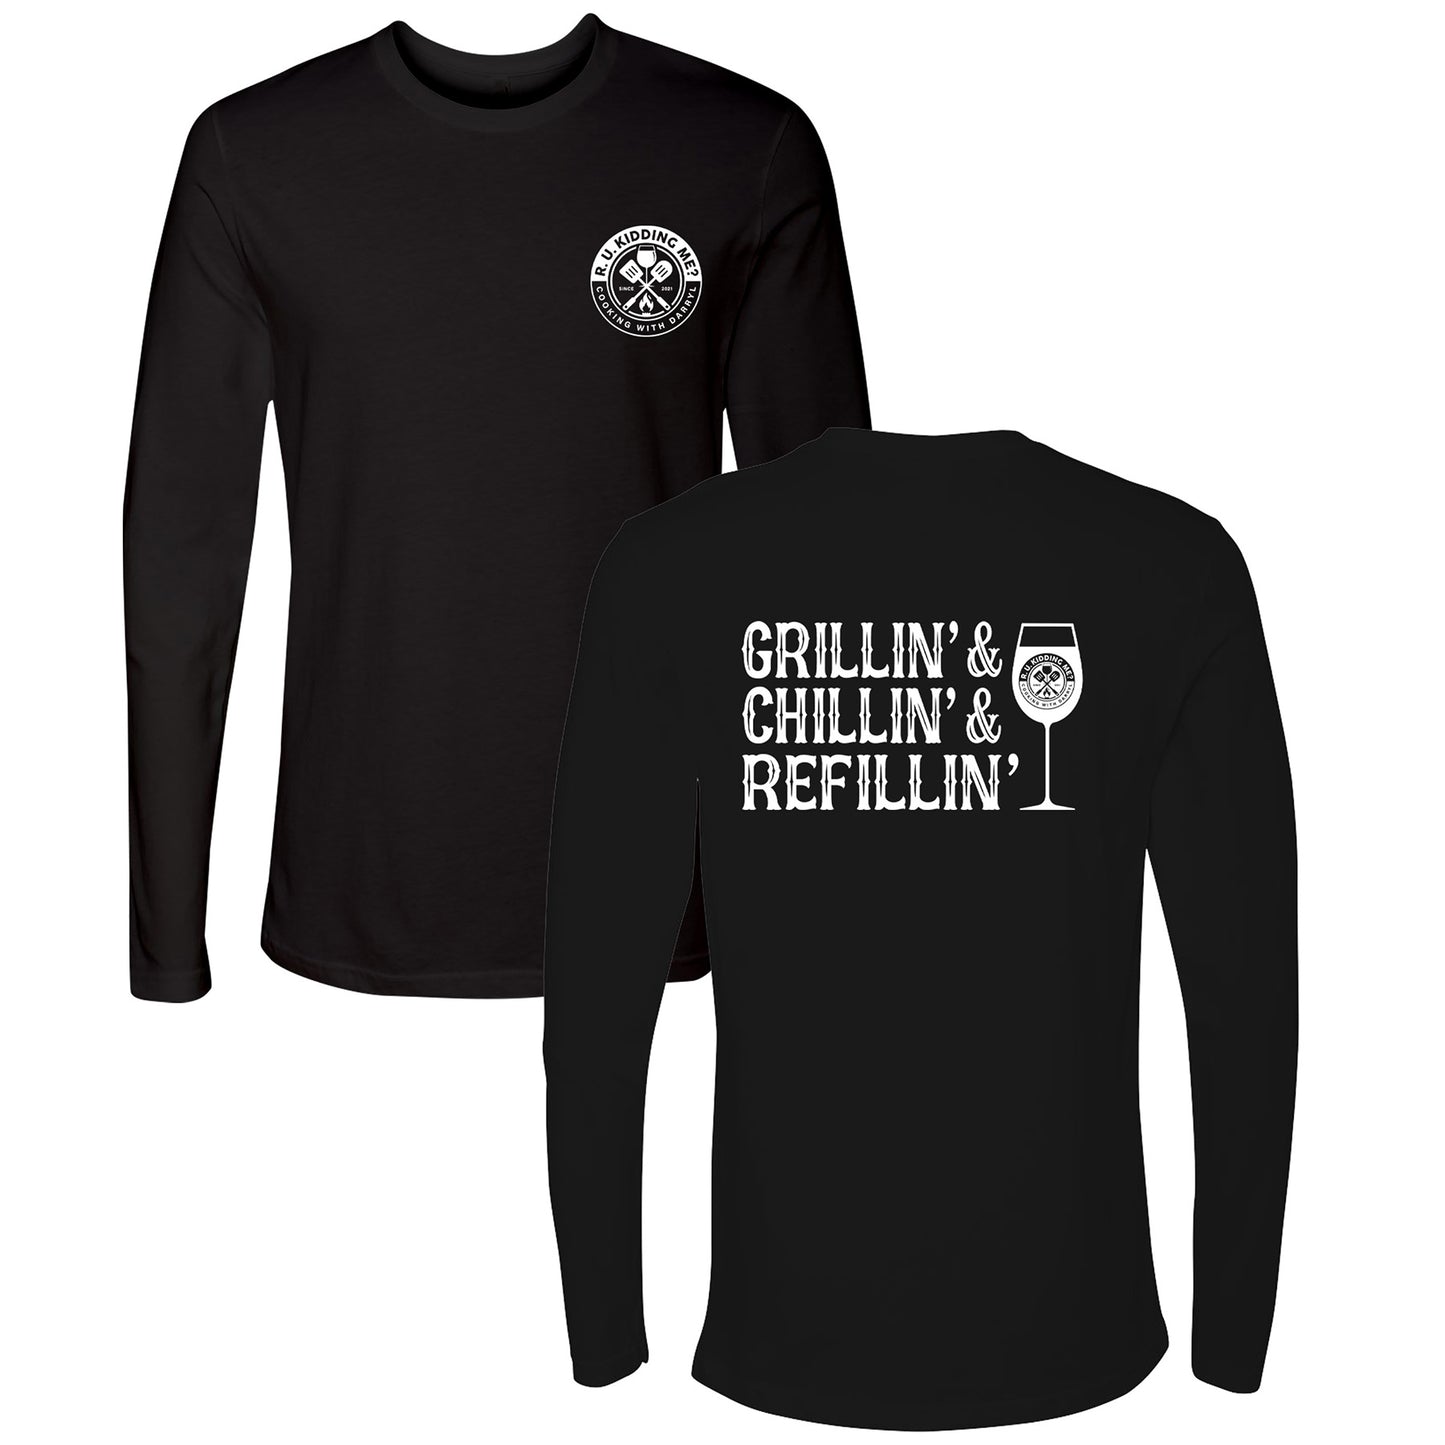 Grilln' & Chilln' & Refilln' - Long Sleeve T-Shirt